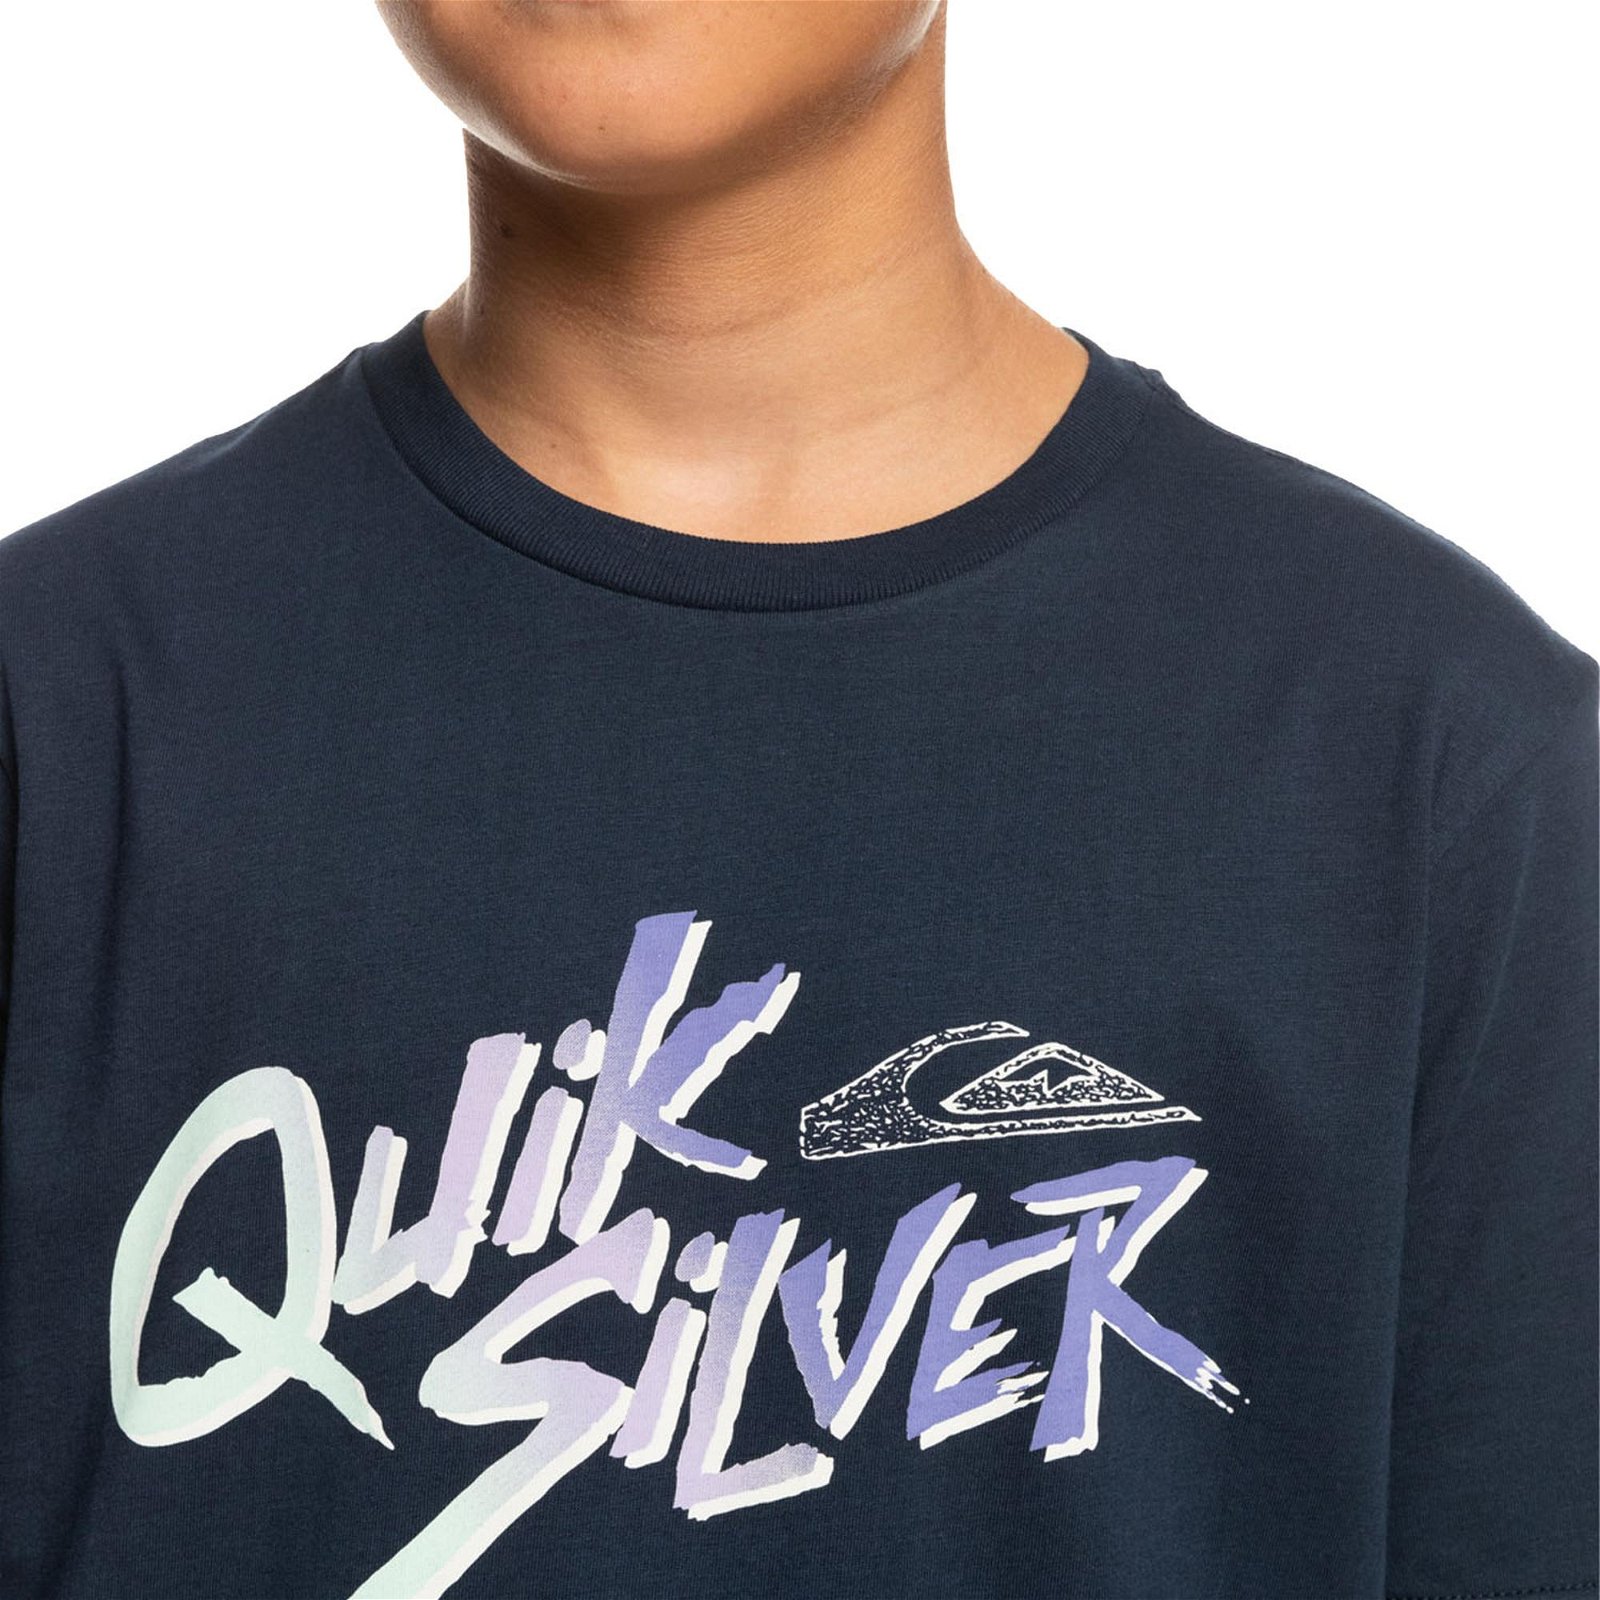 Quiksilver Signature Move Erkek Çocuk Tişört